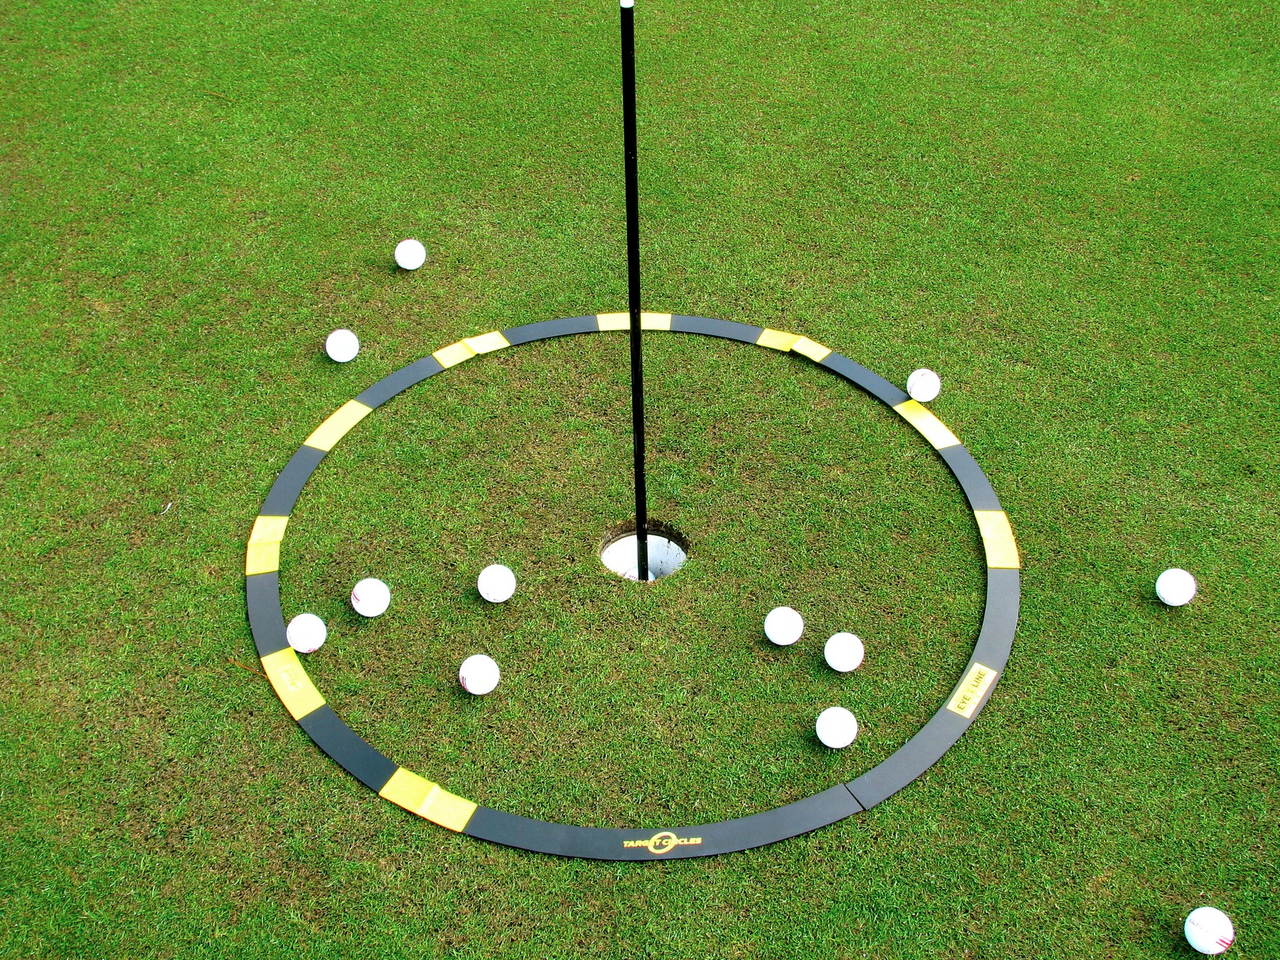 Eyeline Golf Target Circle Training Aid - 3 Foot Diameter